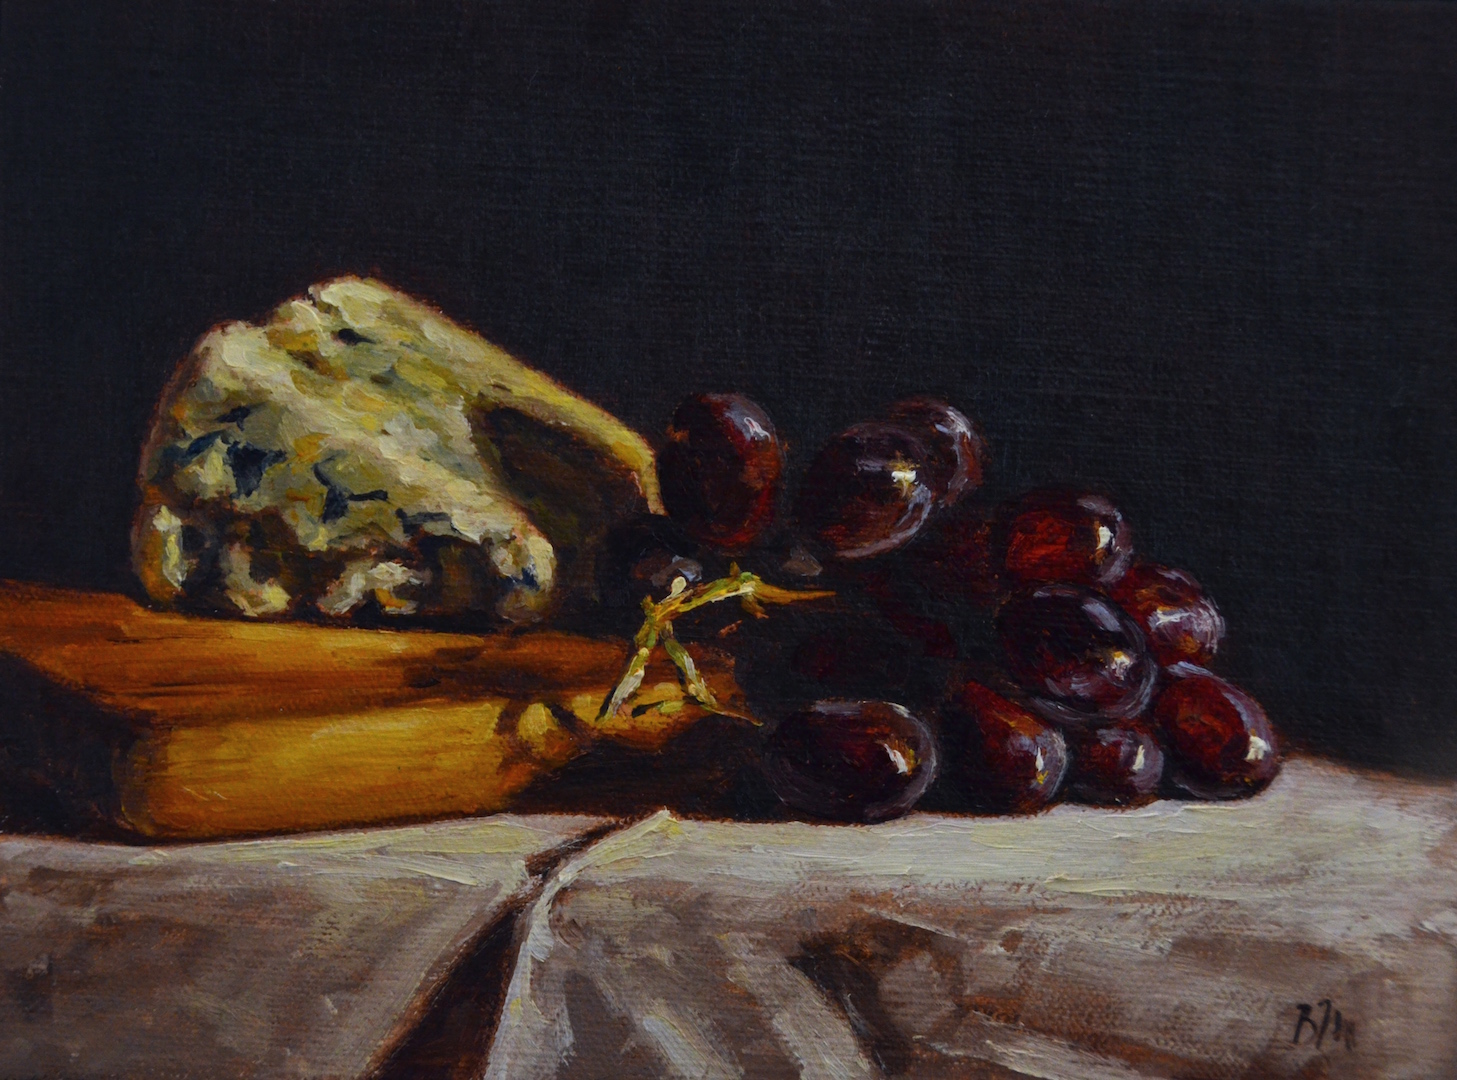 "Stilton Cheese" by Begoña Morton